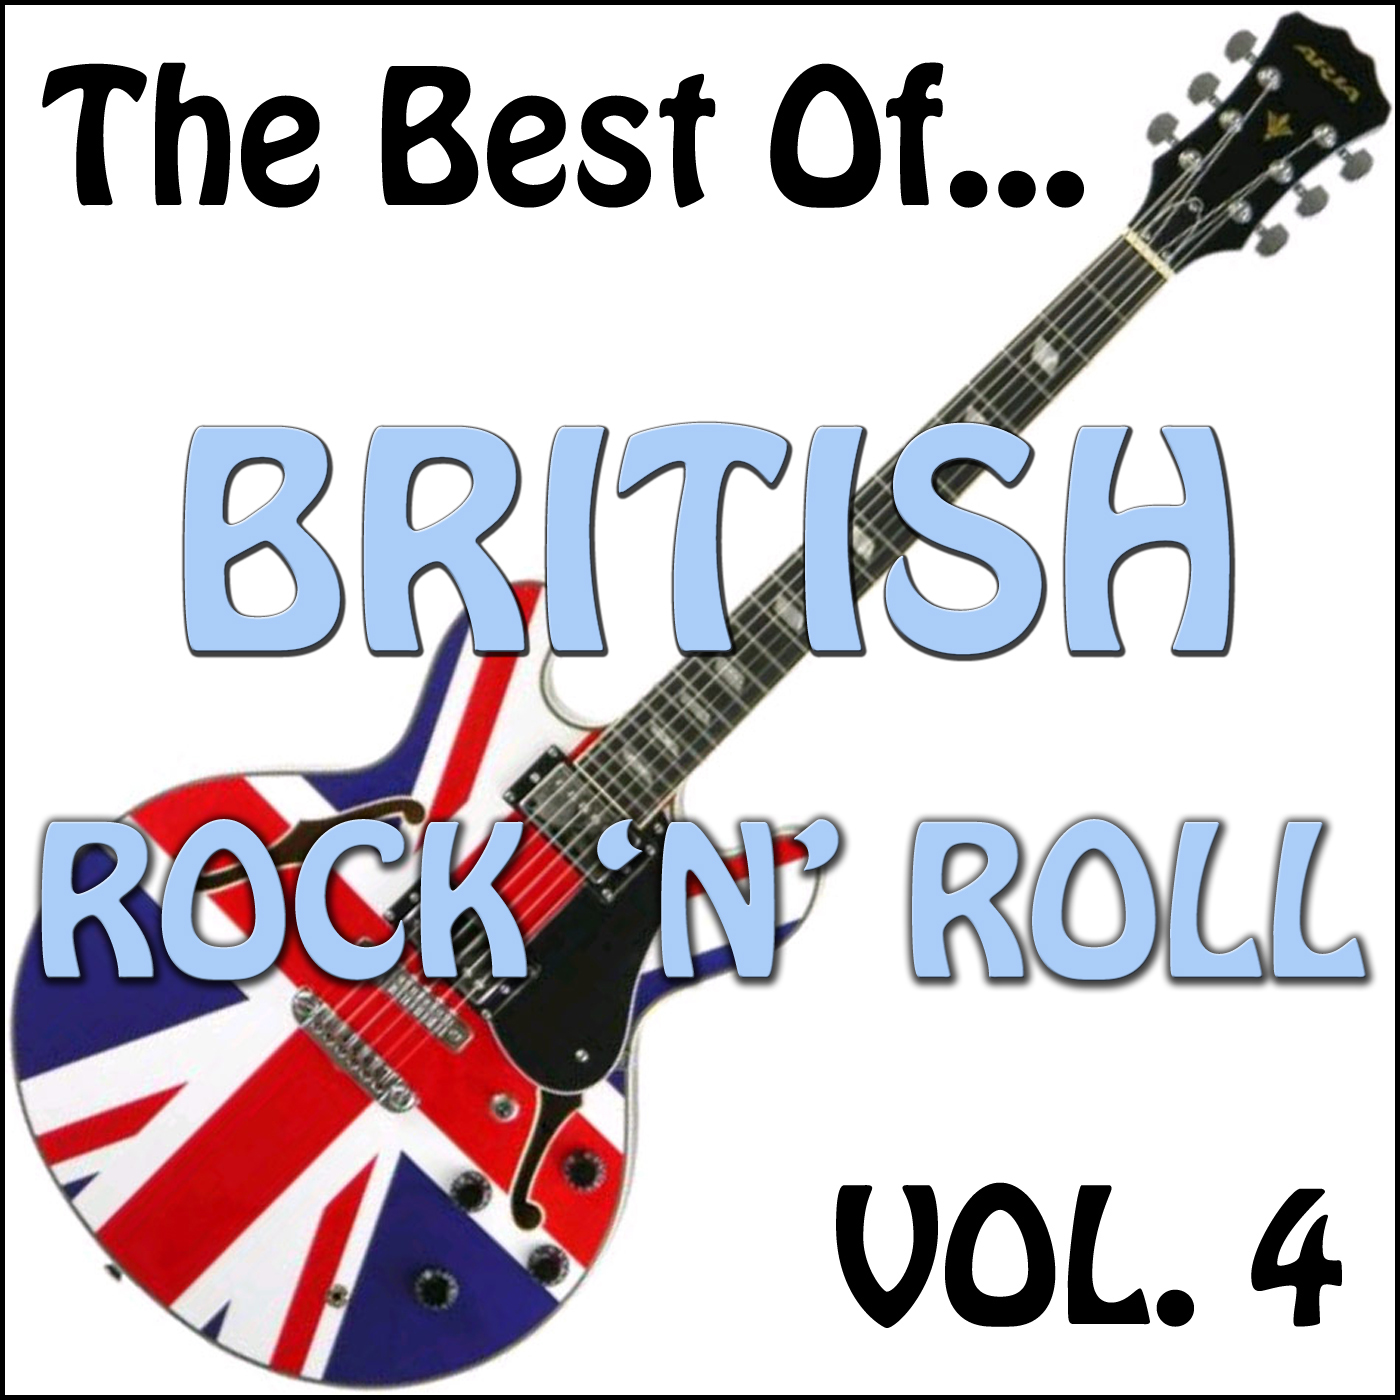 Best of British Rock 'n' Roll Vol. 4